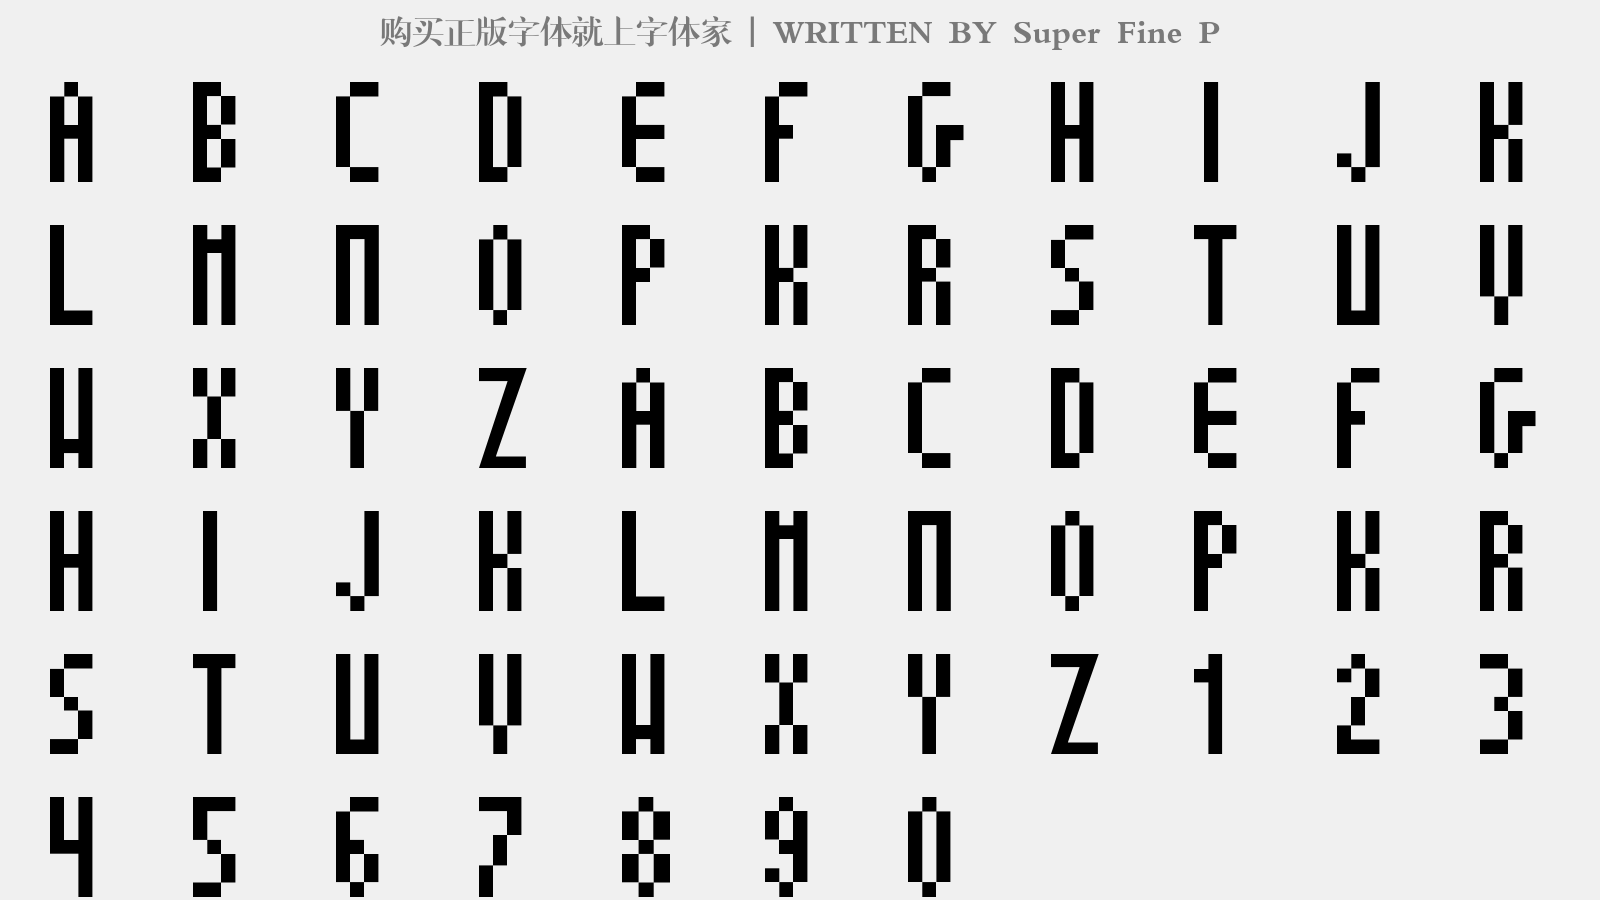 Super Fine P - 大写字母/小写字母/数字